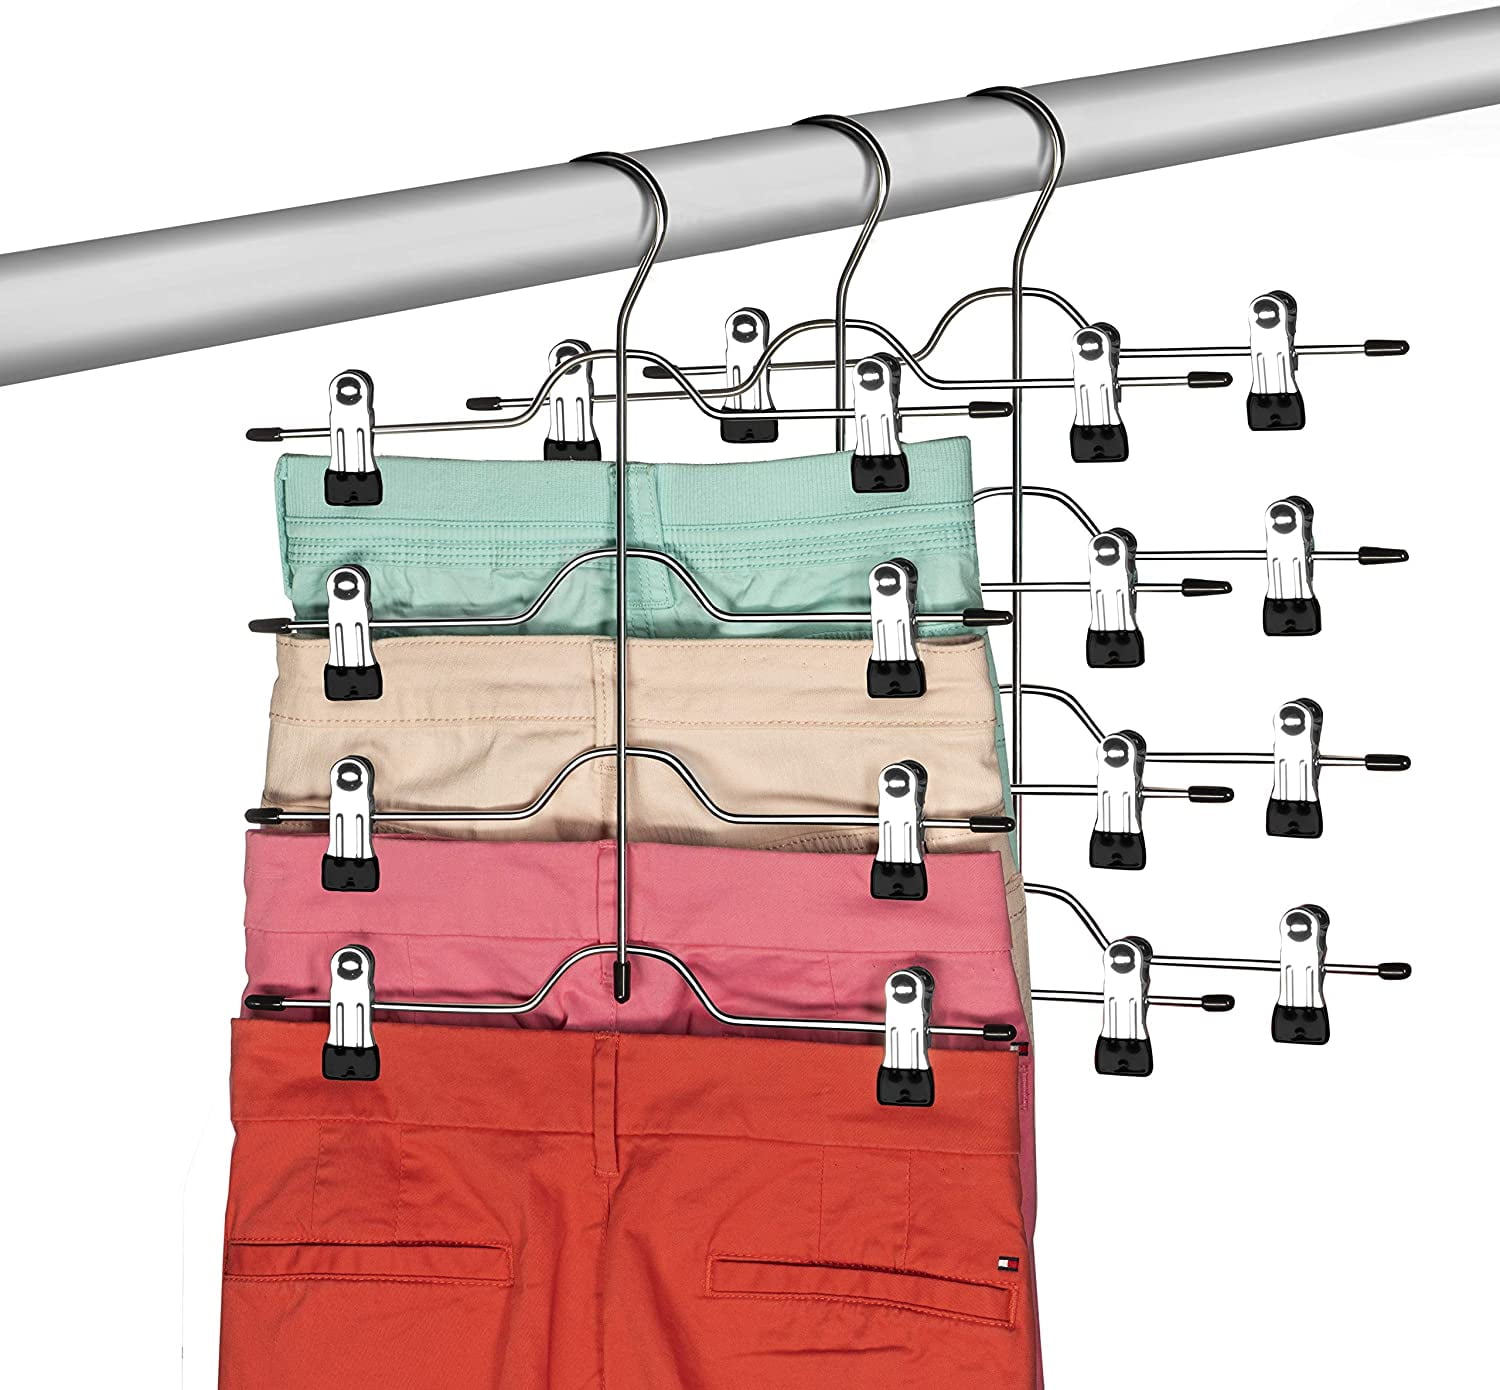 4-Tier Metal Pant Hangers for Slacks Shorts Towels Silver CRI042BK SONGMICS Skirt Trouser Hangers Space Saving Multi Hangers with Clips Non Slip Set of 3 32 cm Jeans